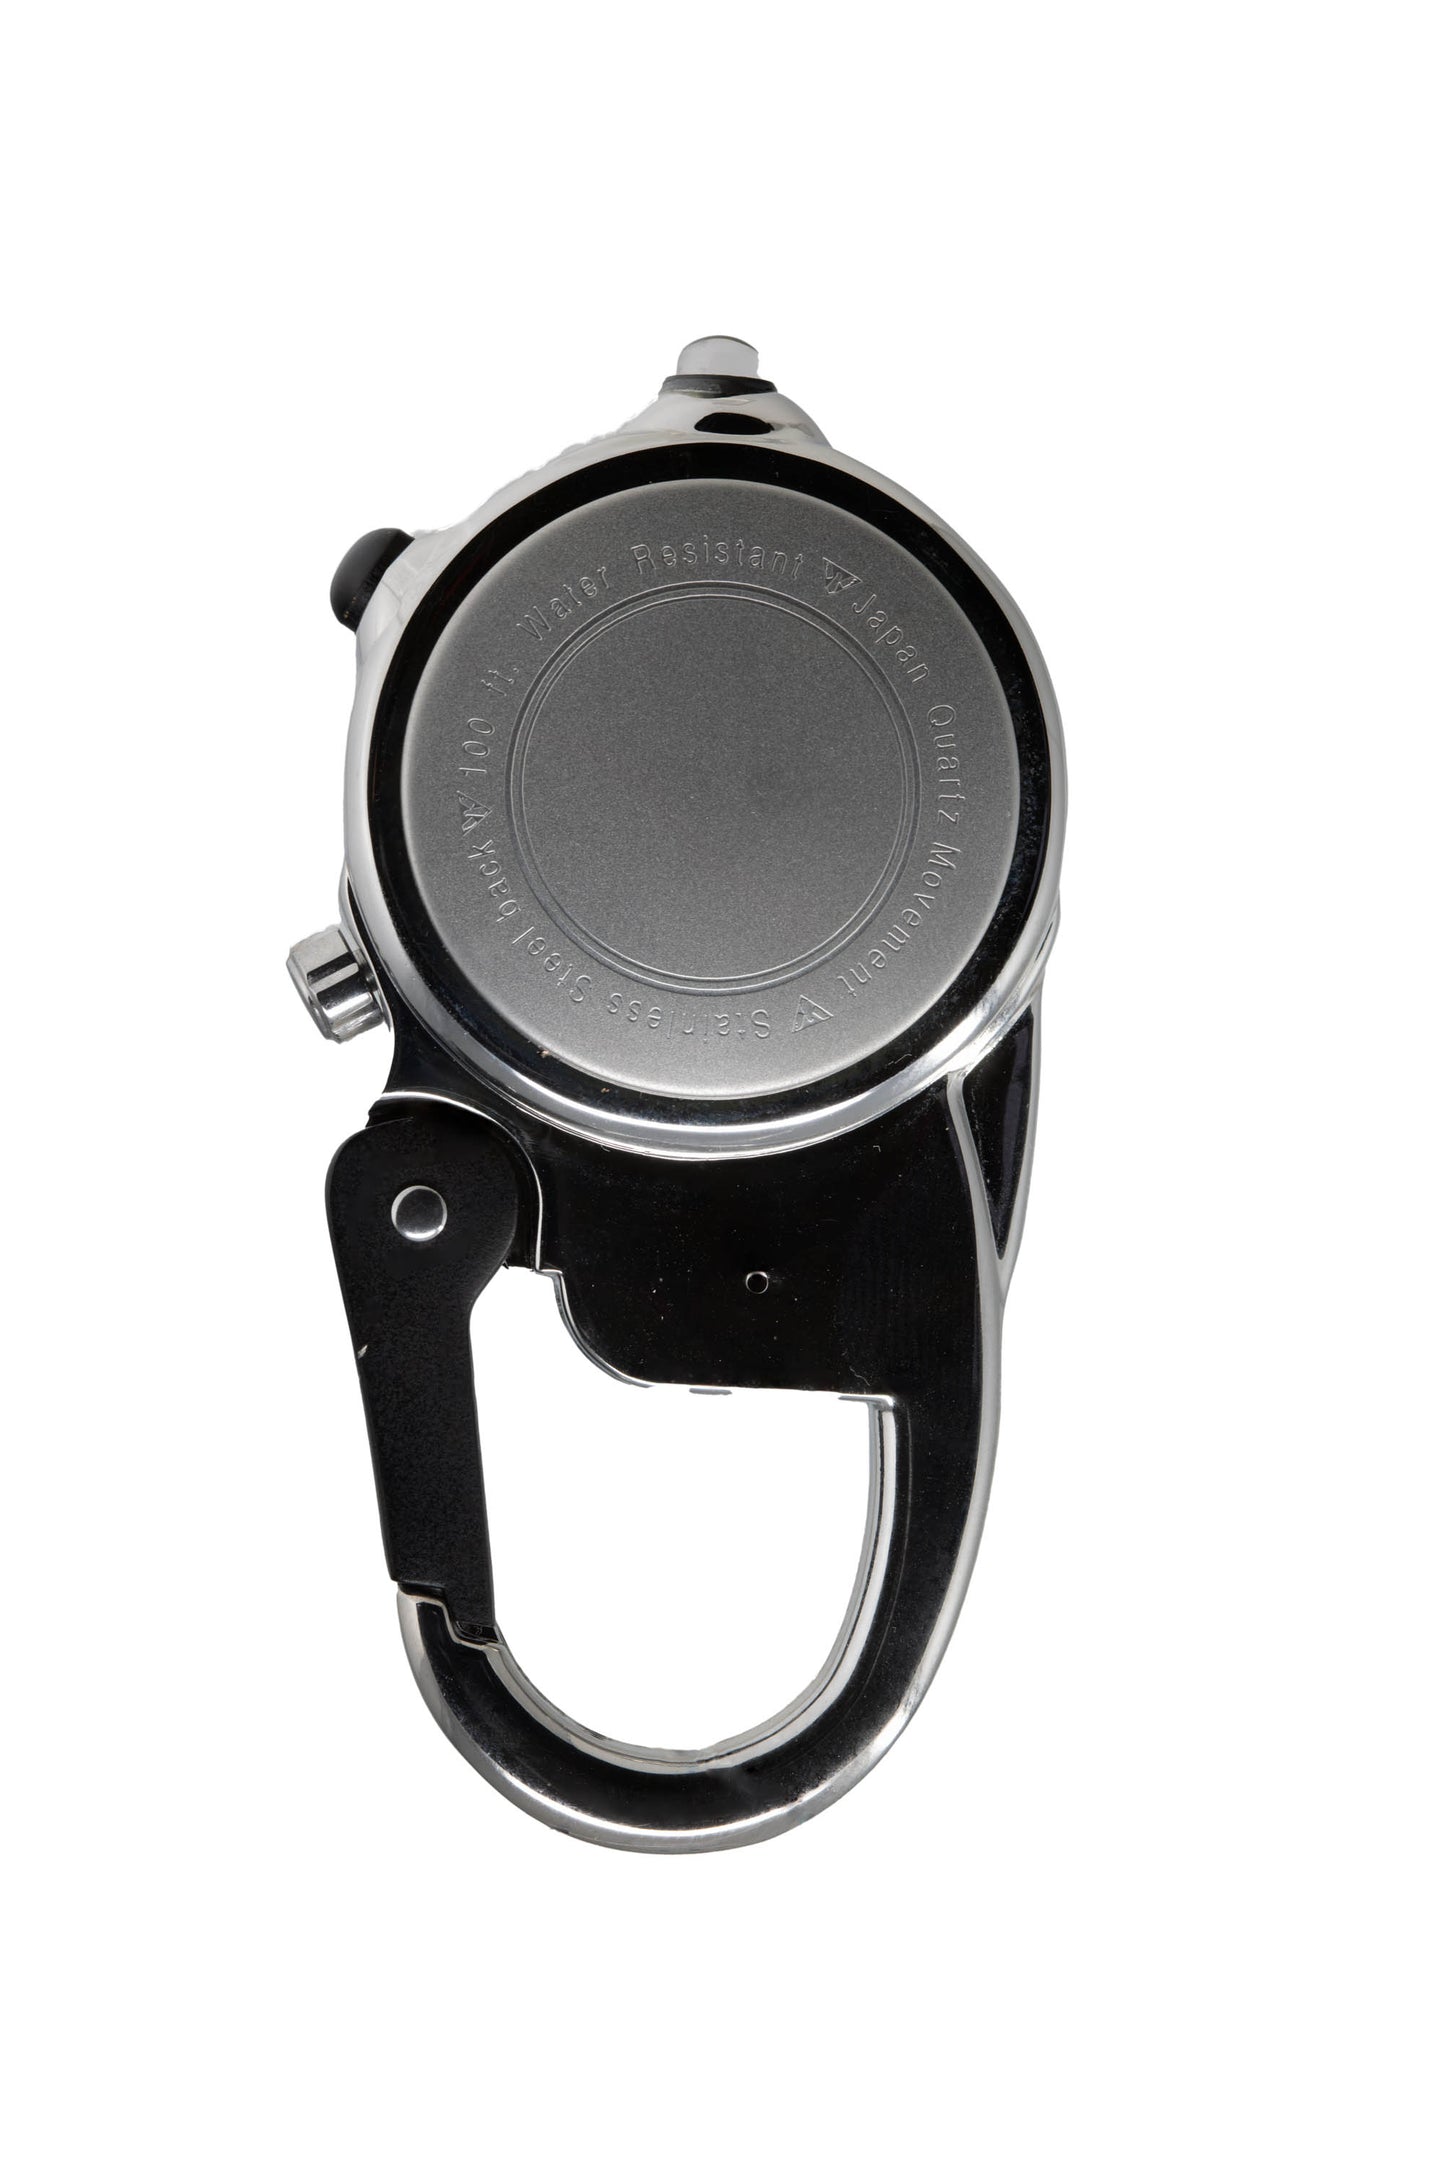 Miniclip Microlight - Chome Silver Case Black Dial